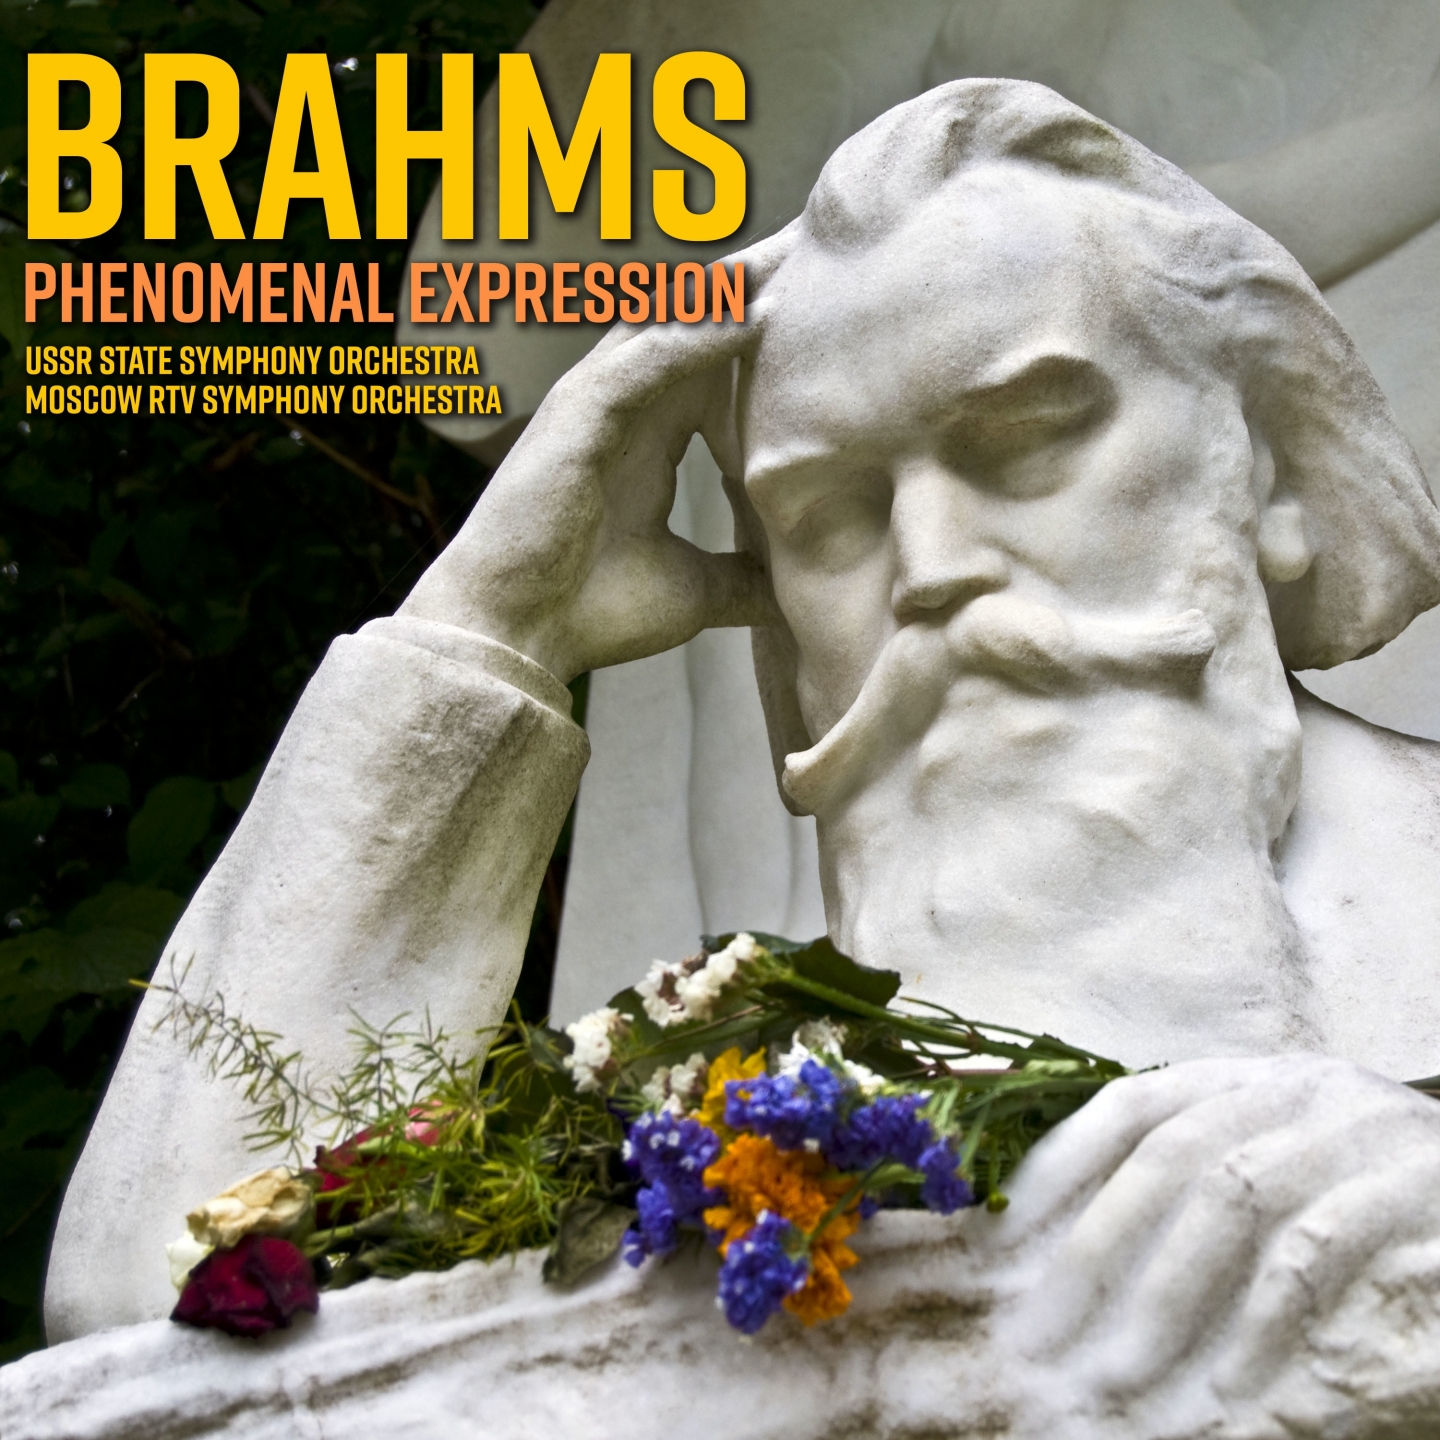 Brahms: Phenomenal expression